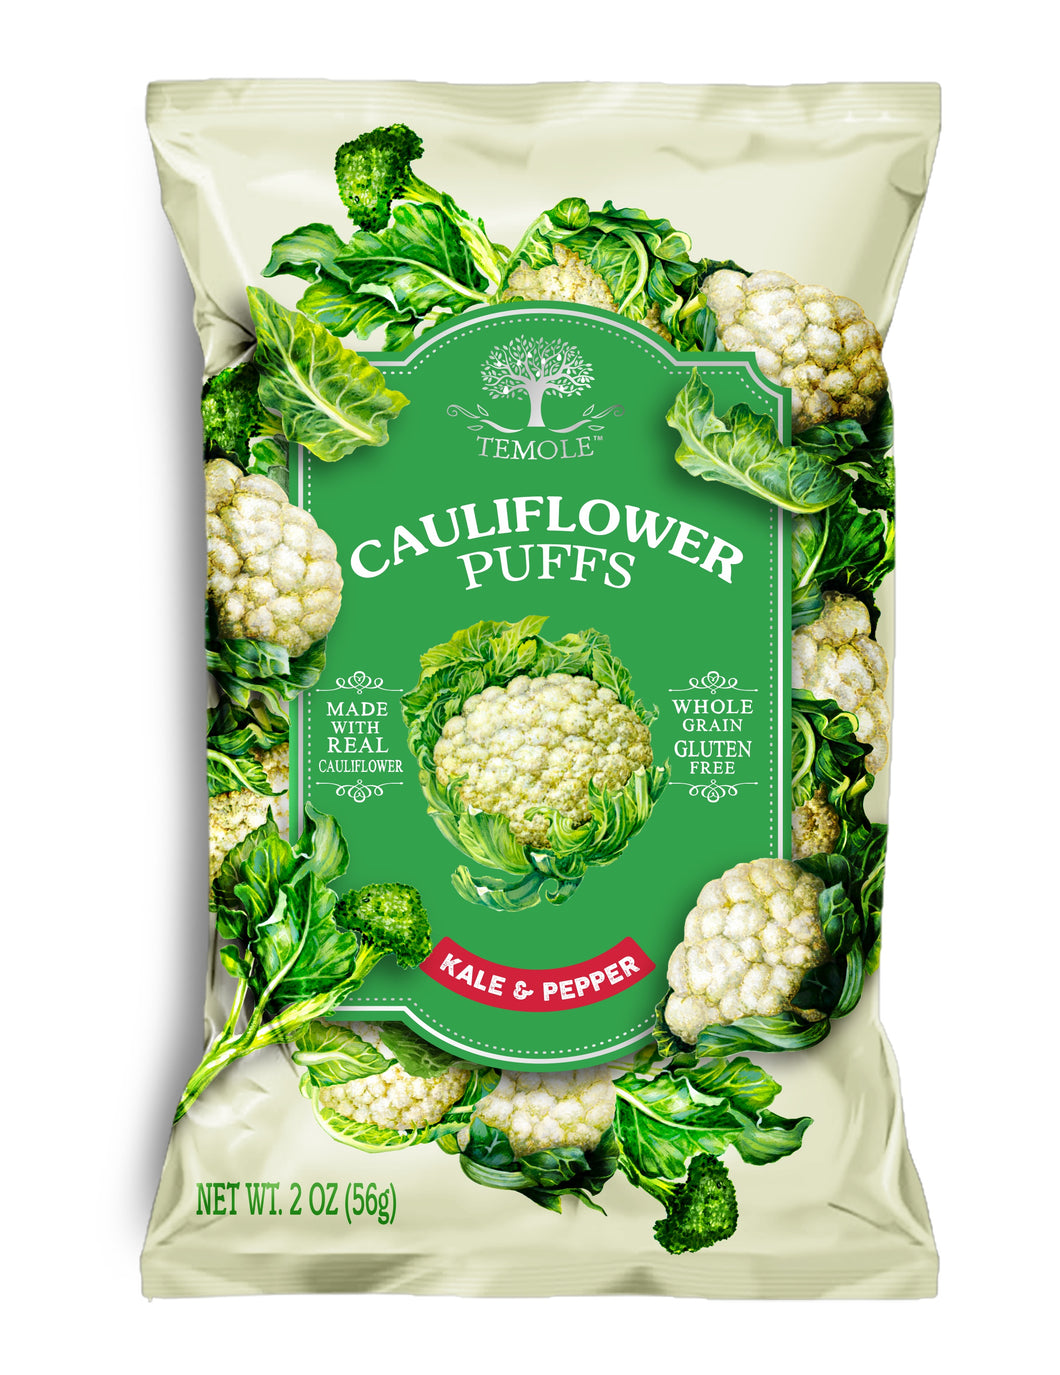 TEMOLE CAULIFLOWER PUFFS Kale & Pepper 56g